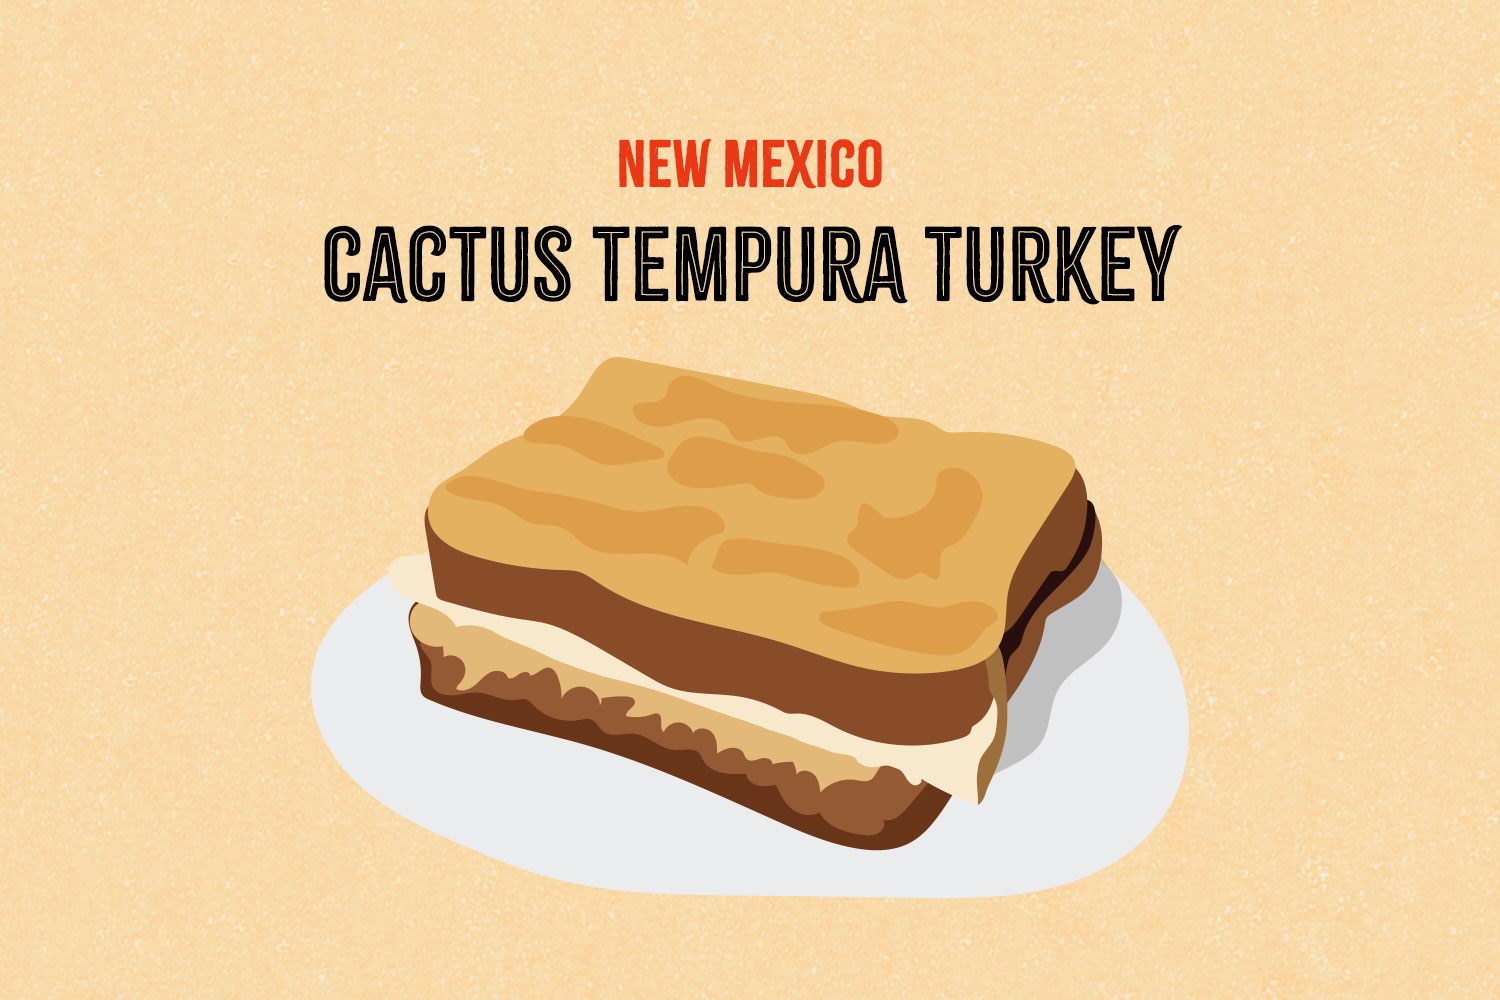 Cactus Tempura Turkey illustration